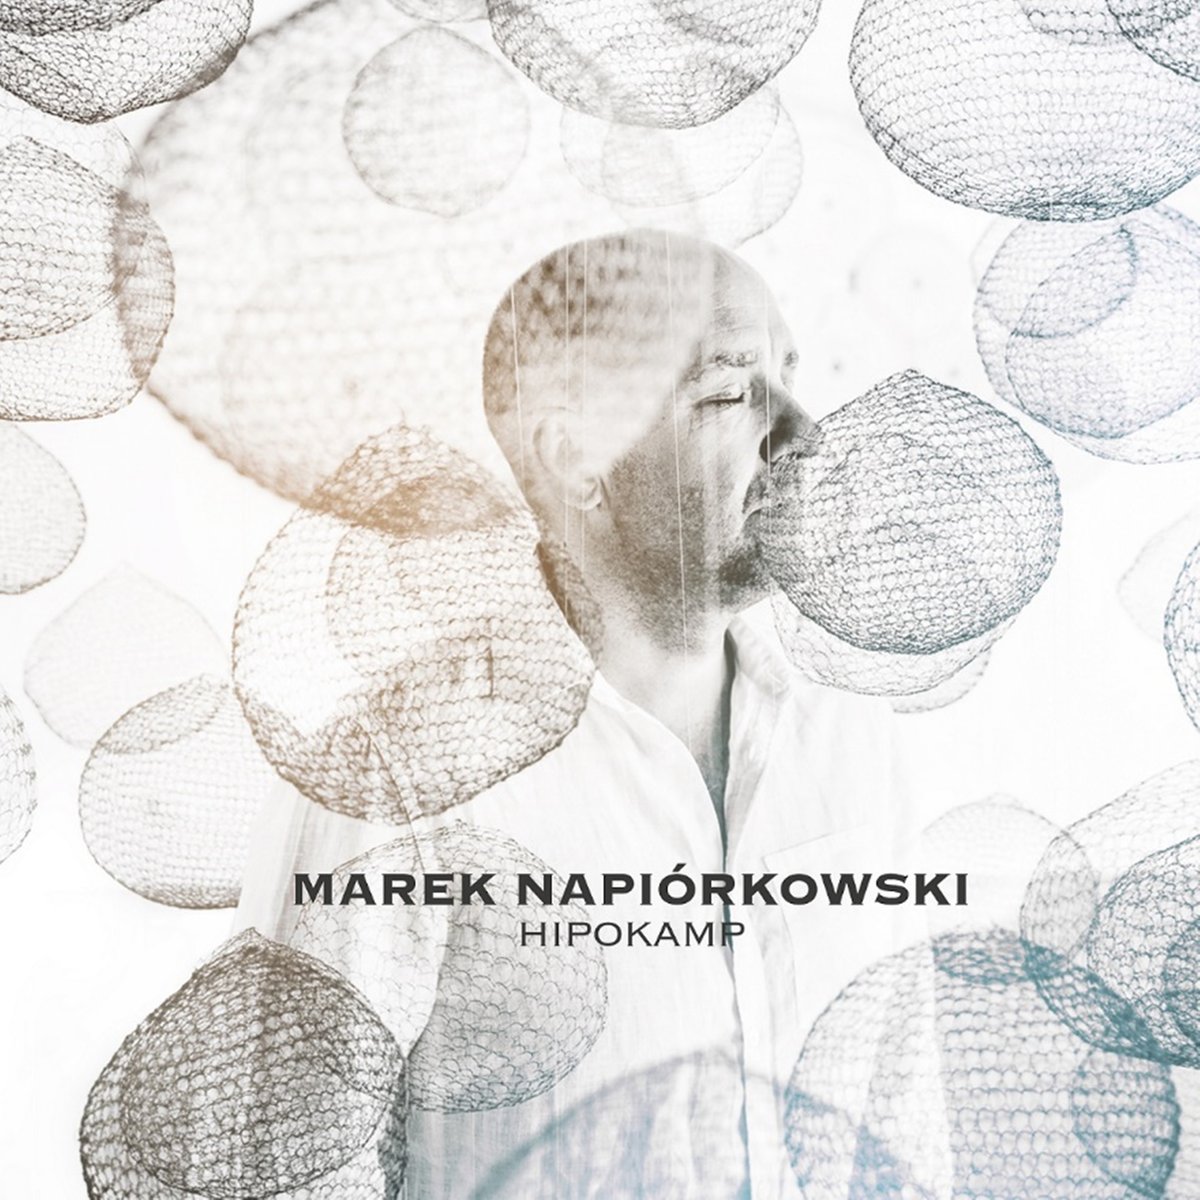 MAREK NAPIÓRKOWSKI - Hipokamp cover 